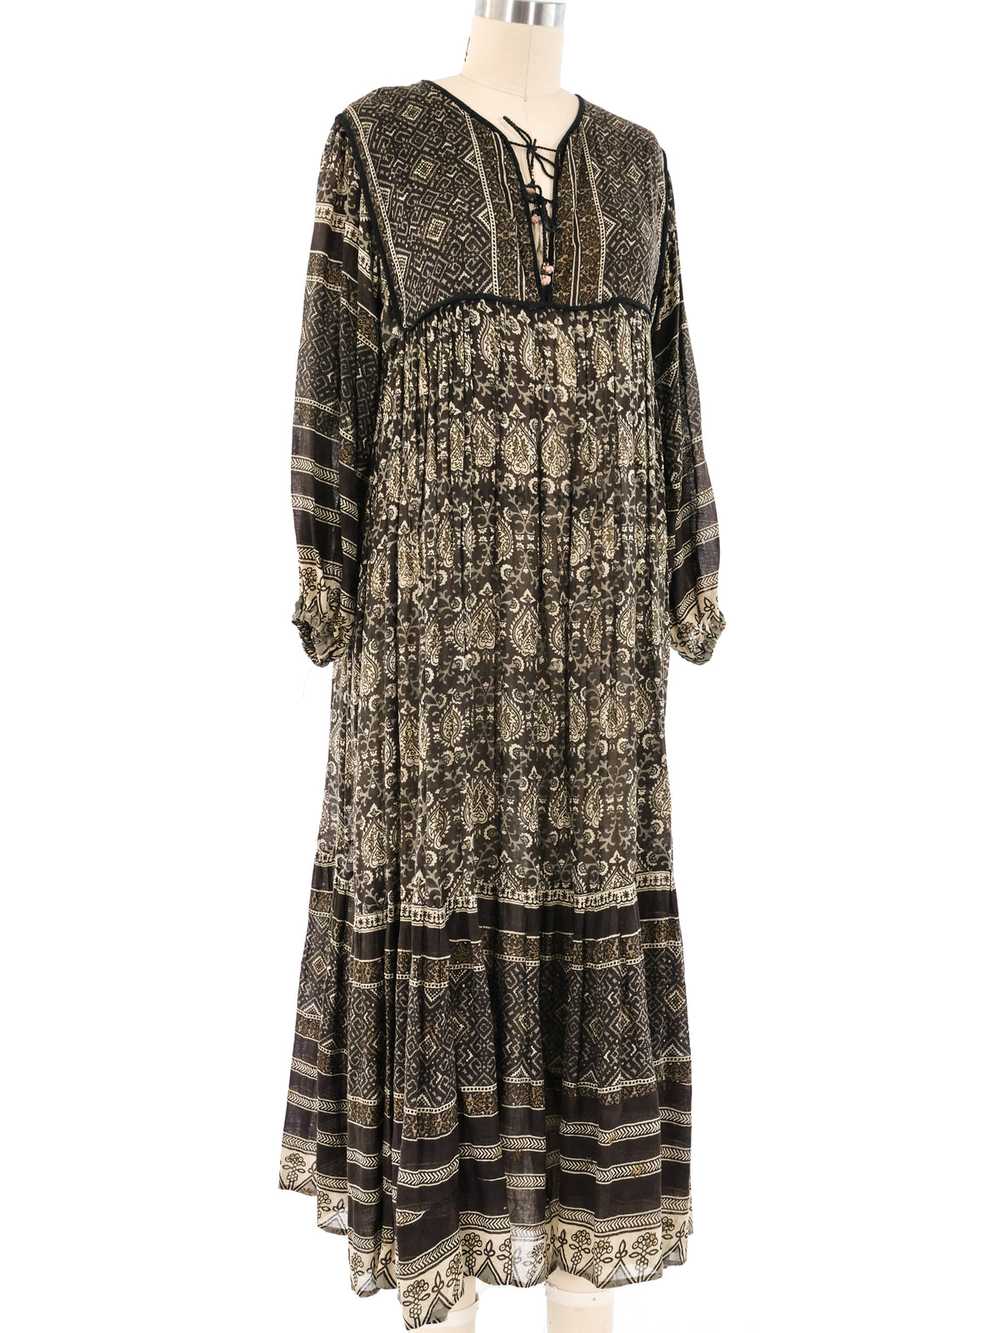 Paisley Block Printed Indian Dress - image 3